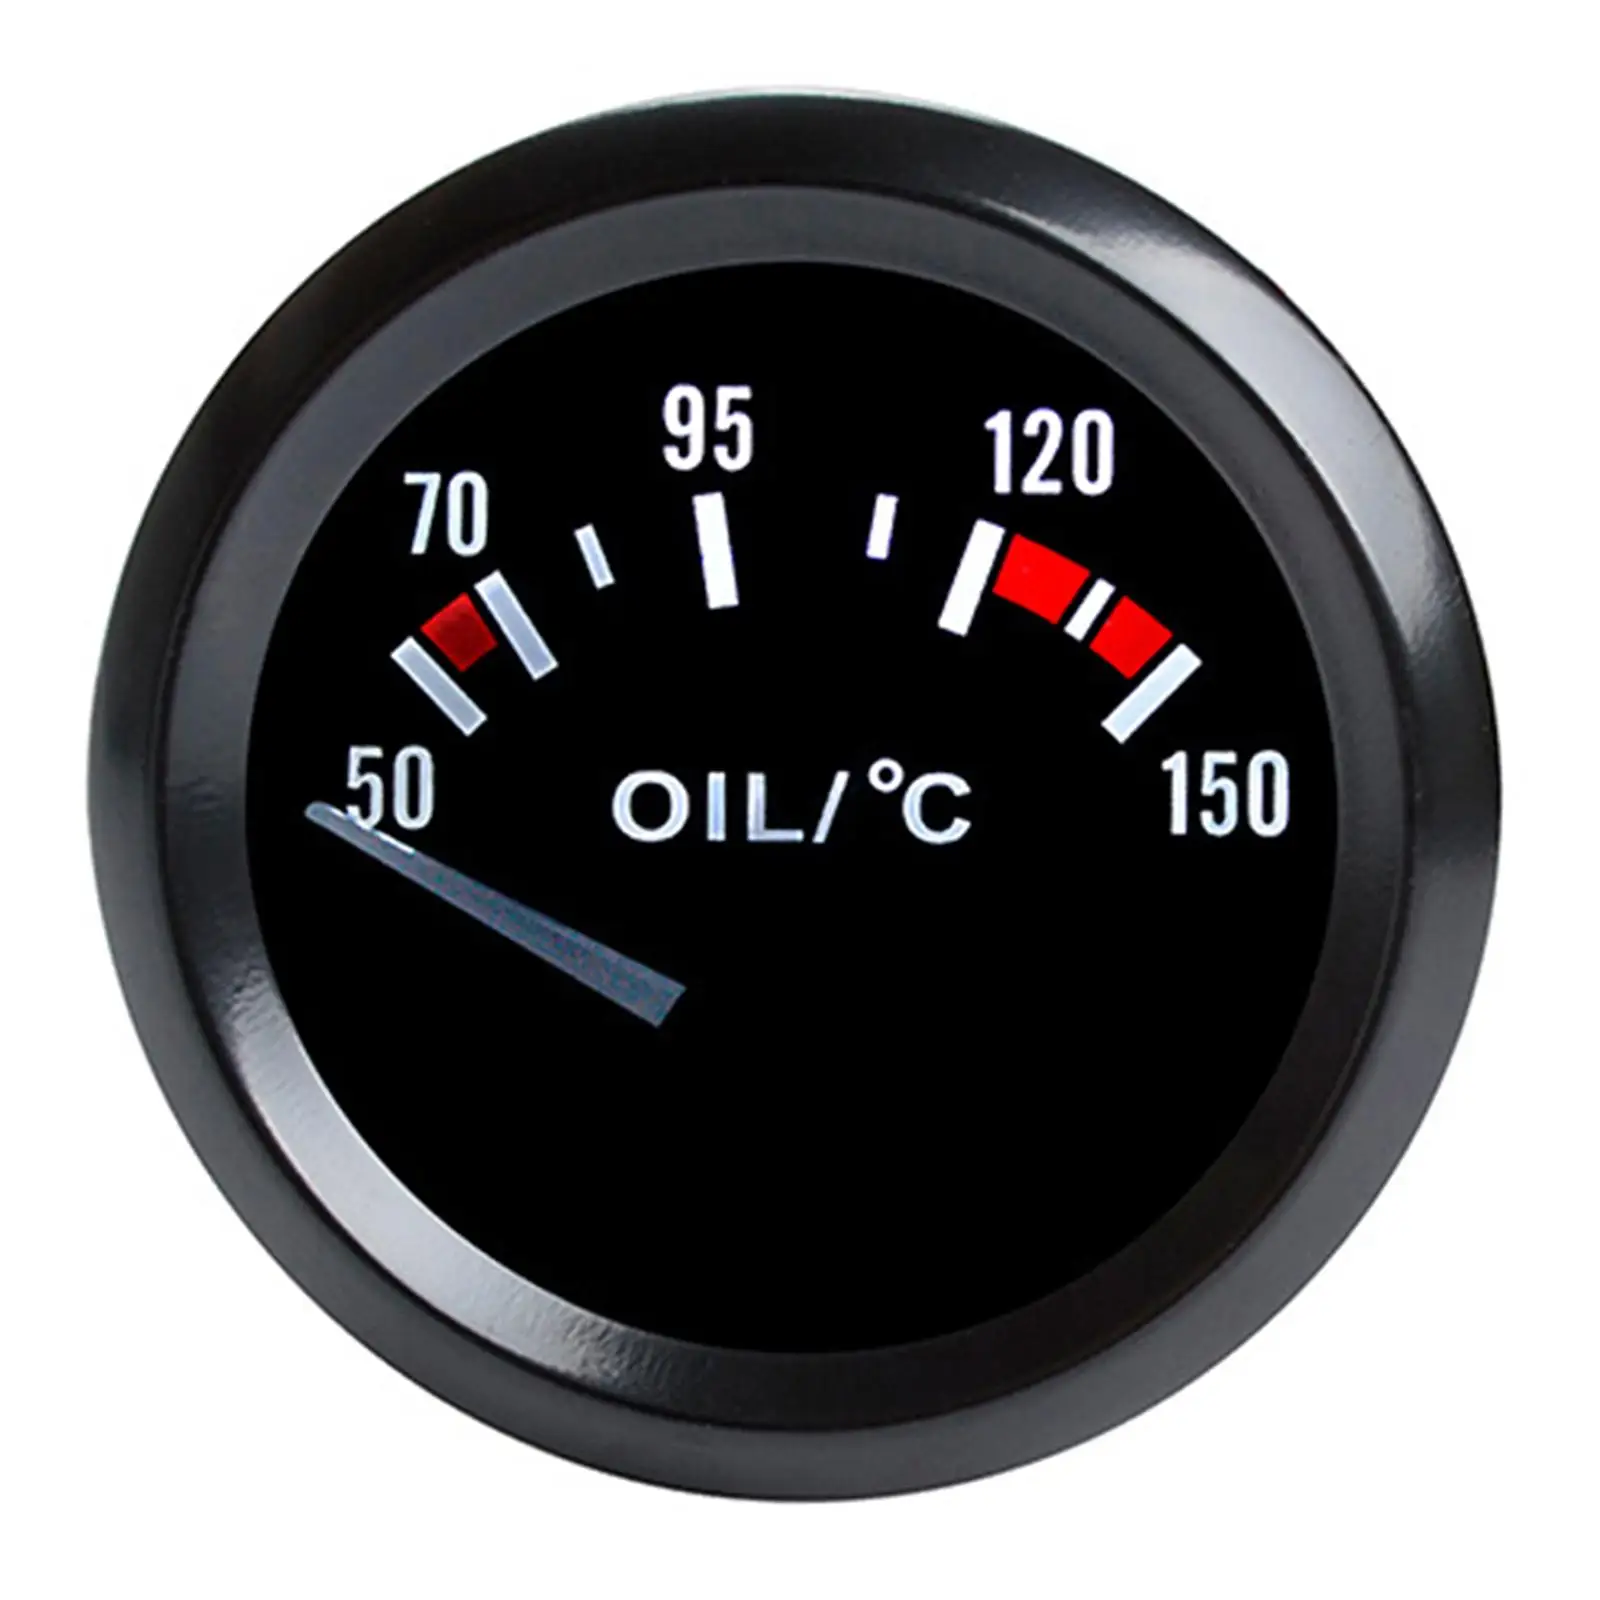 Oil Temp Gauge Oil Temperature Gauge 52mm Car Oil Temp Gauge Meter for Vehicle